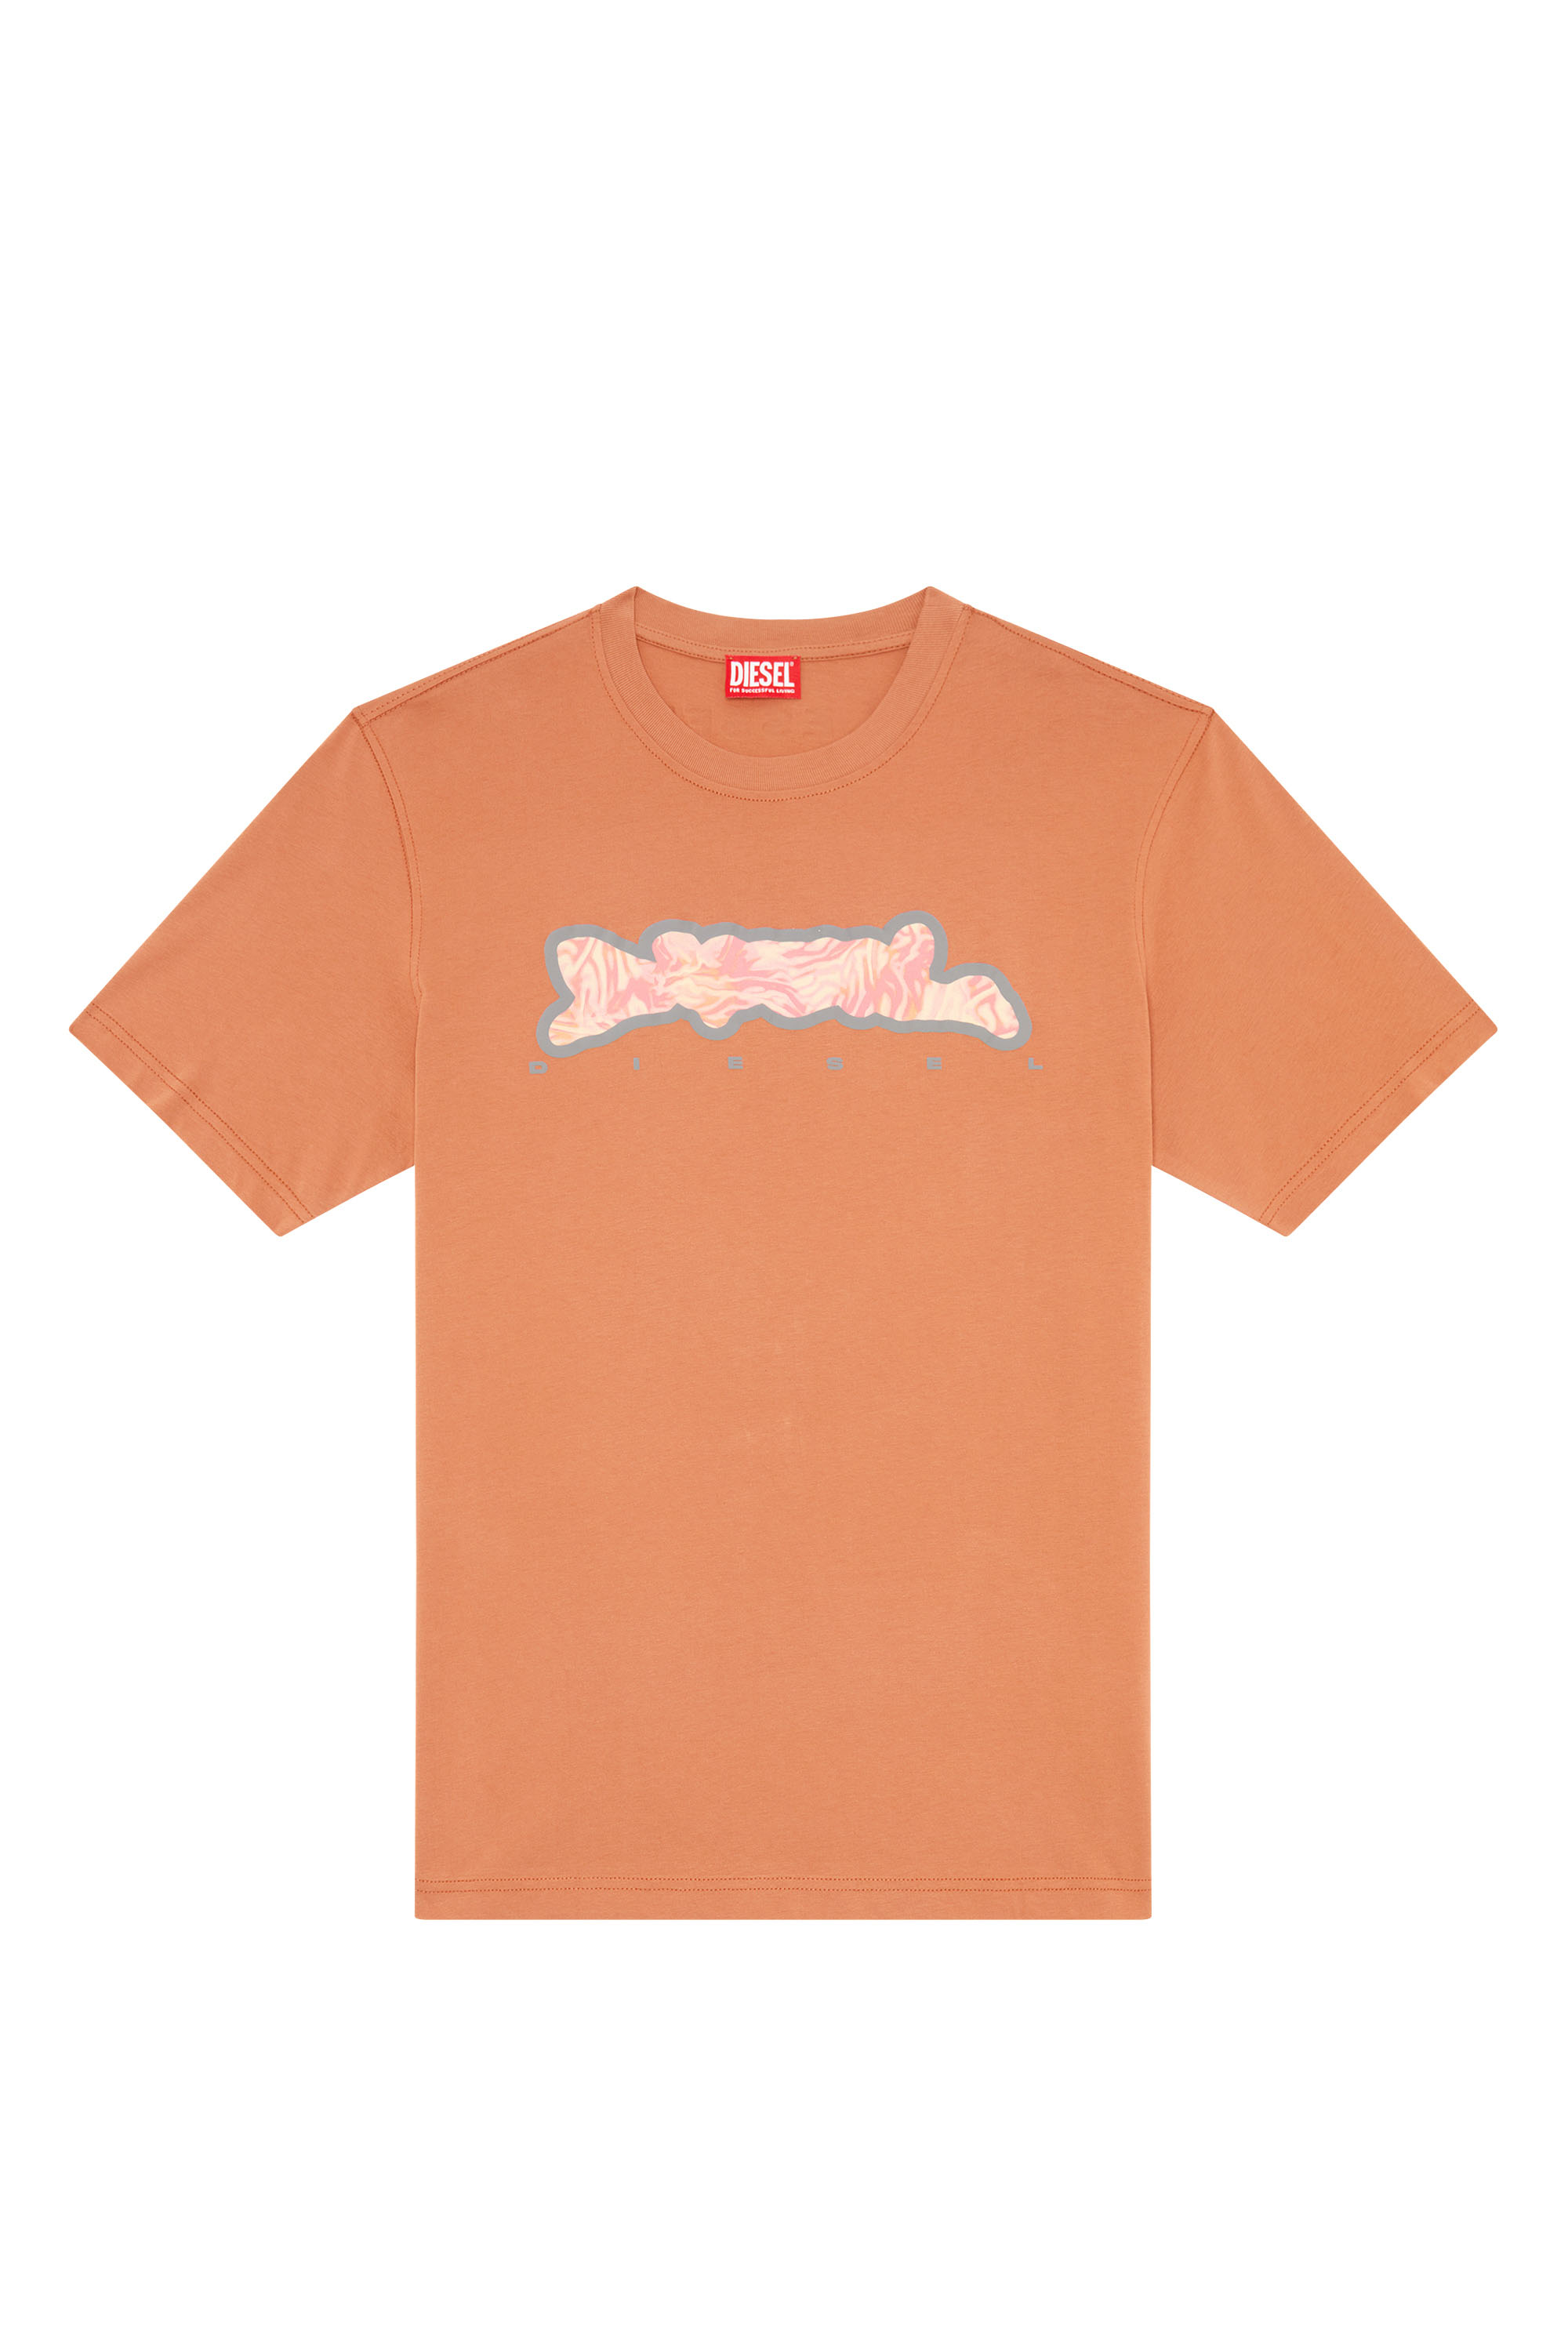 Diesel - T-JUST-N16, Man T-shirt with zebra-camo motif in Orange - Image 2